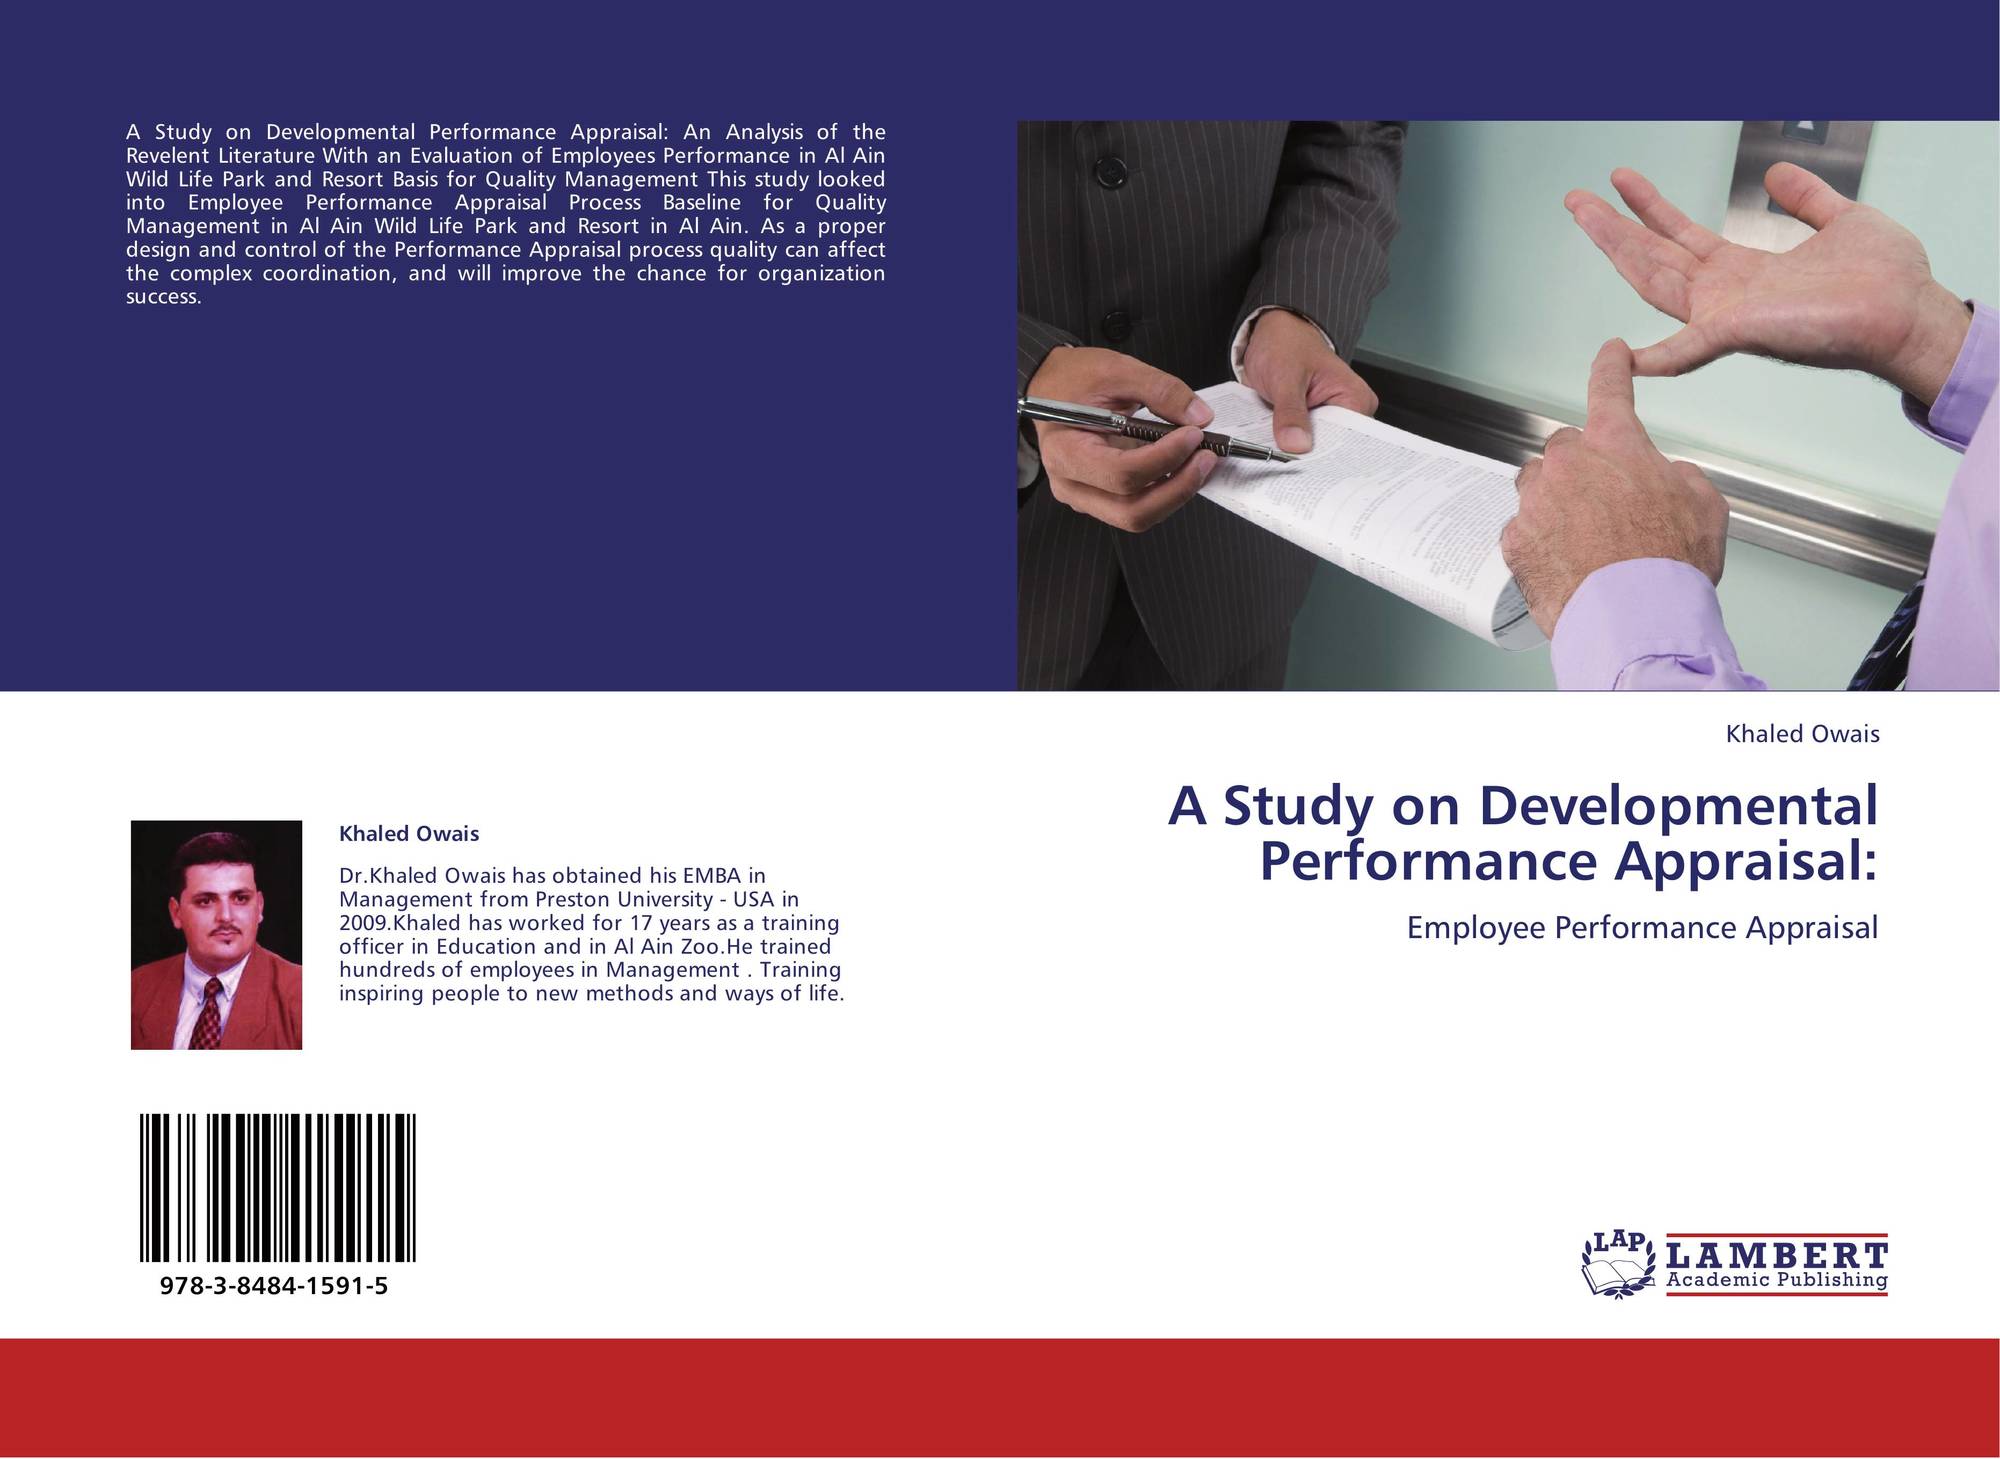 developmental purpose of performance appraisal